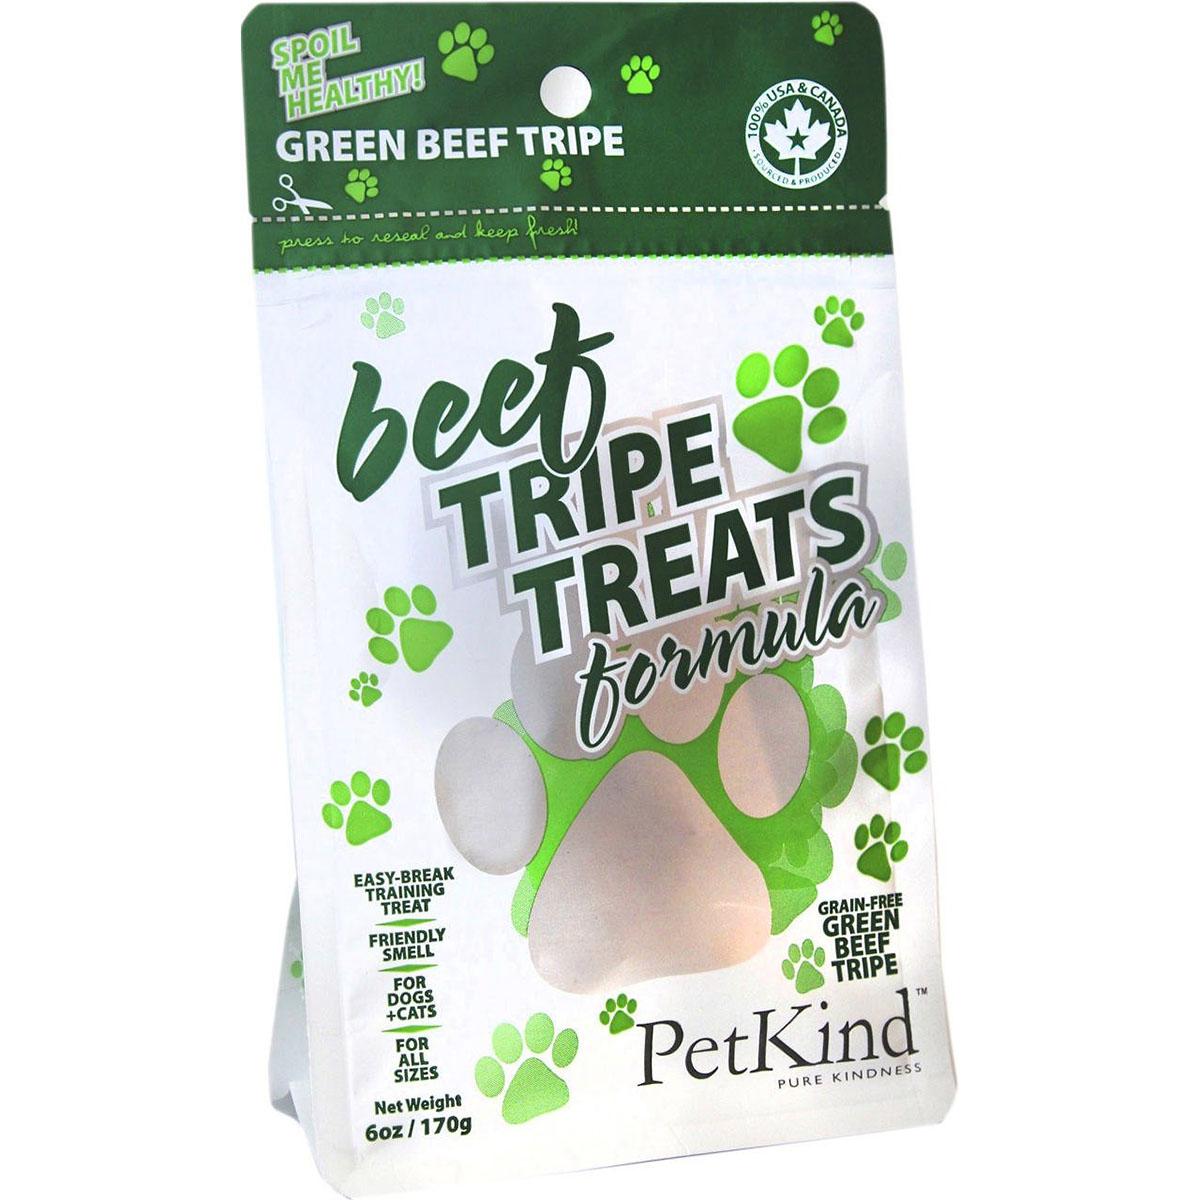 PetKind Grain-Free Green Beef Tripe Dog and Cat Treats